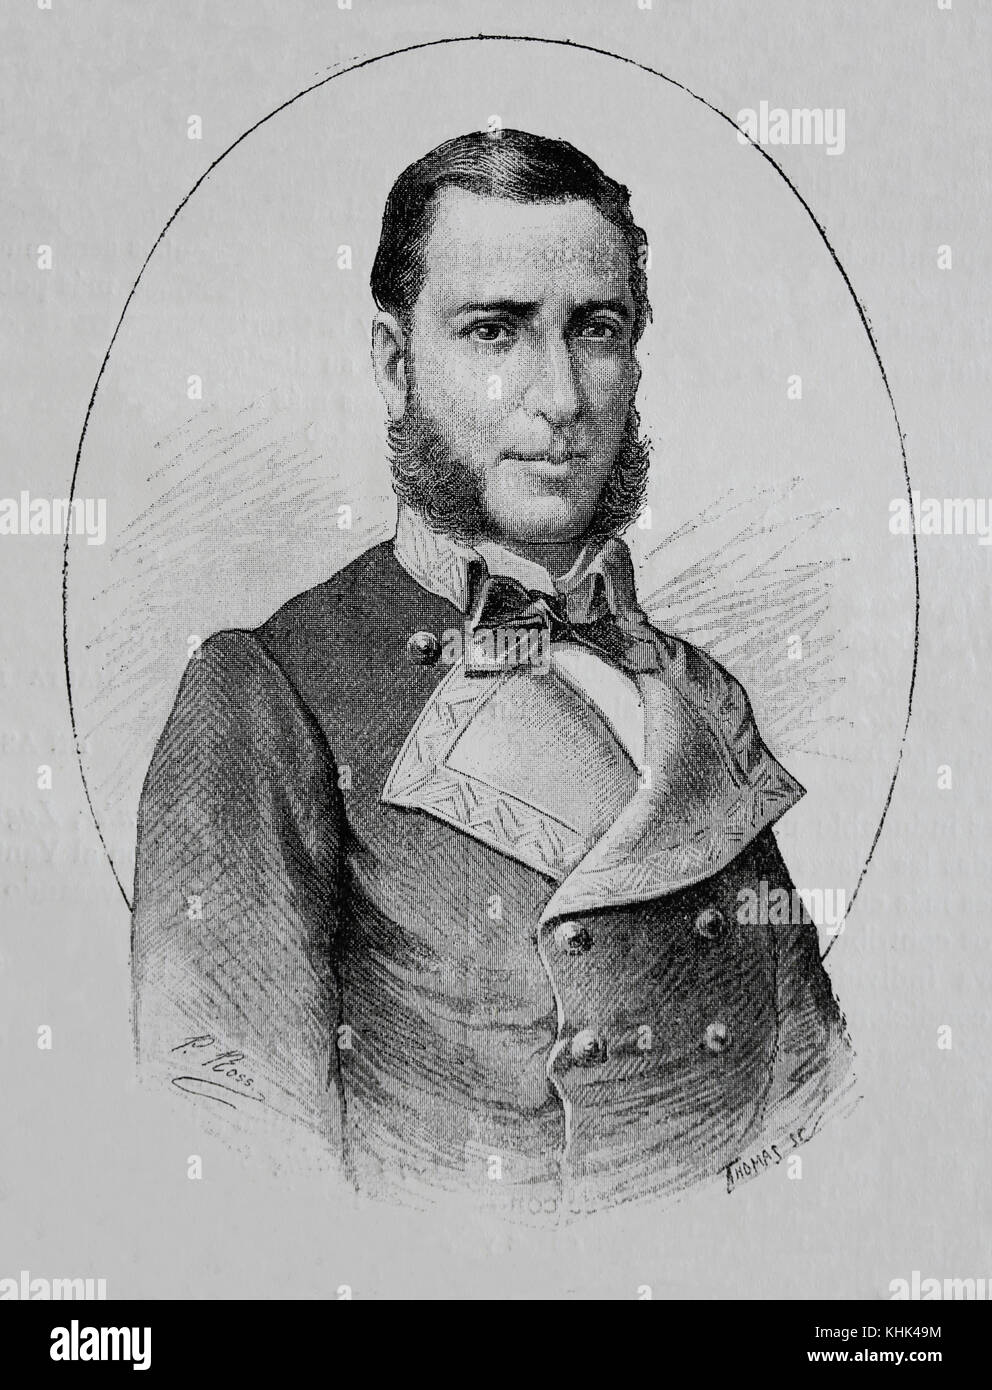 Castro Mendez Nunez (1824-1869). Spanischer Marineoffizier. Portait. Gravur, 1883. Stockfoto